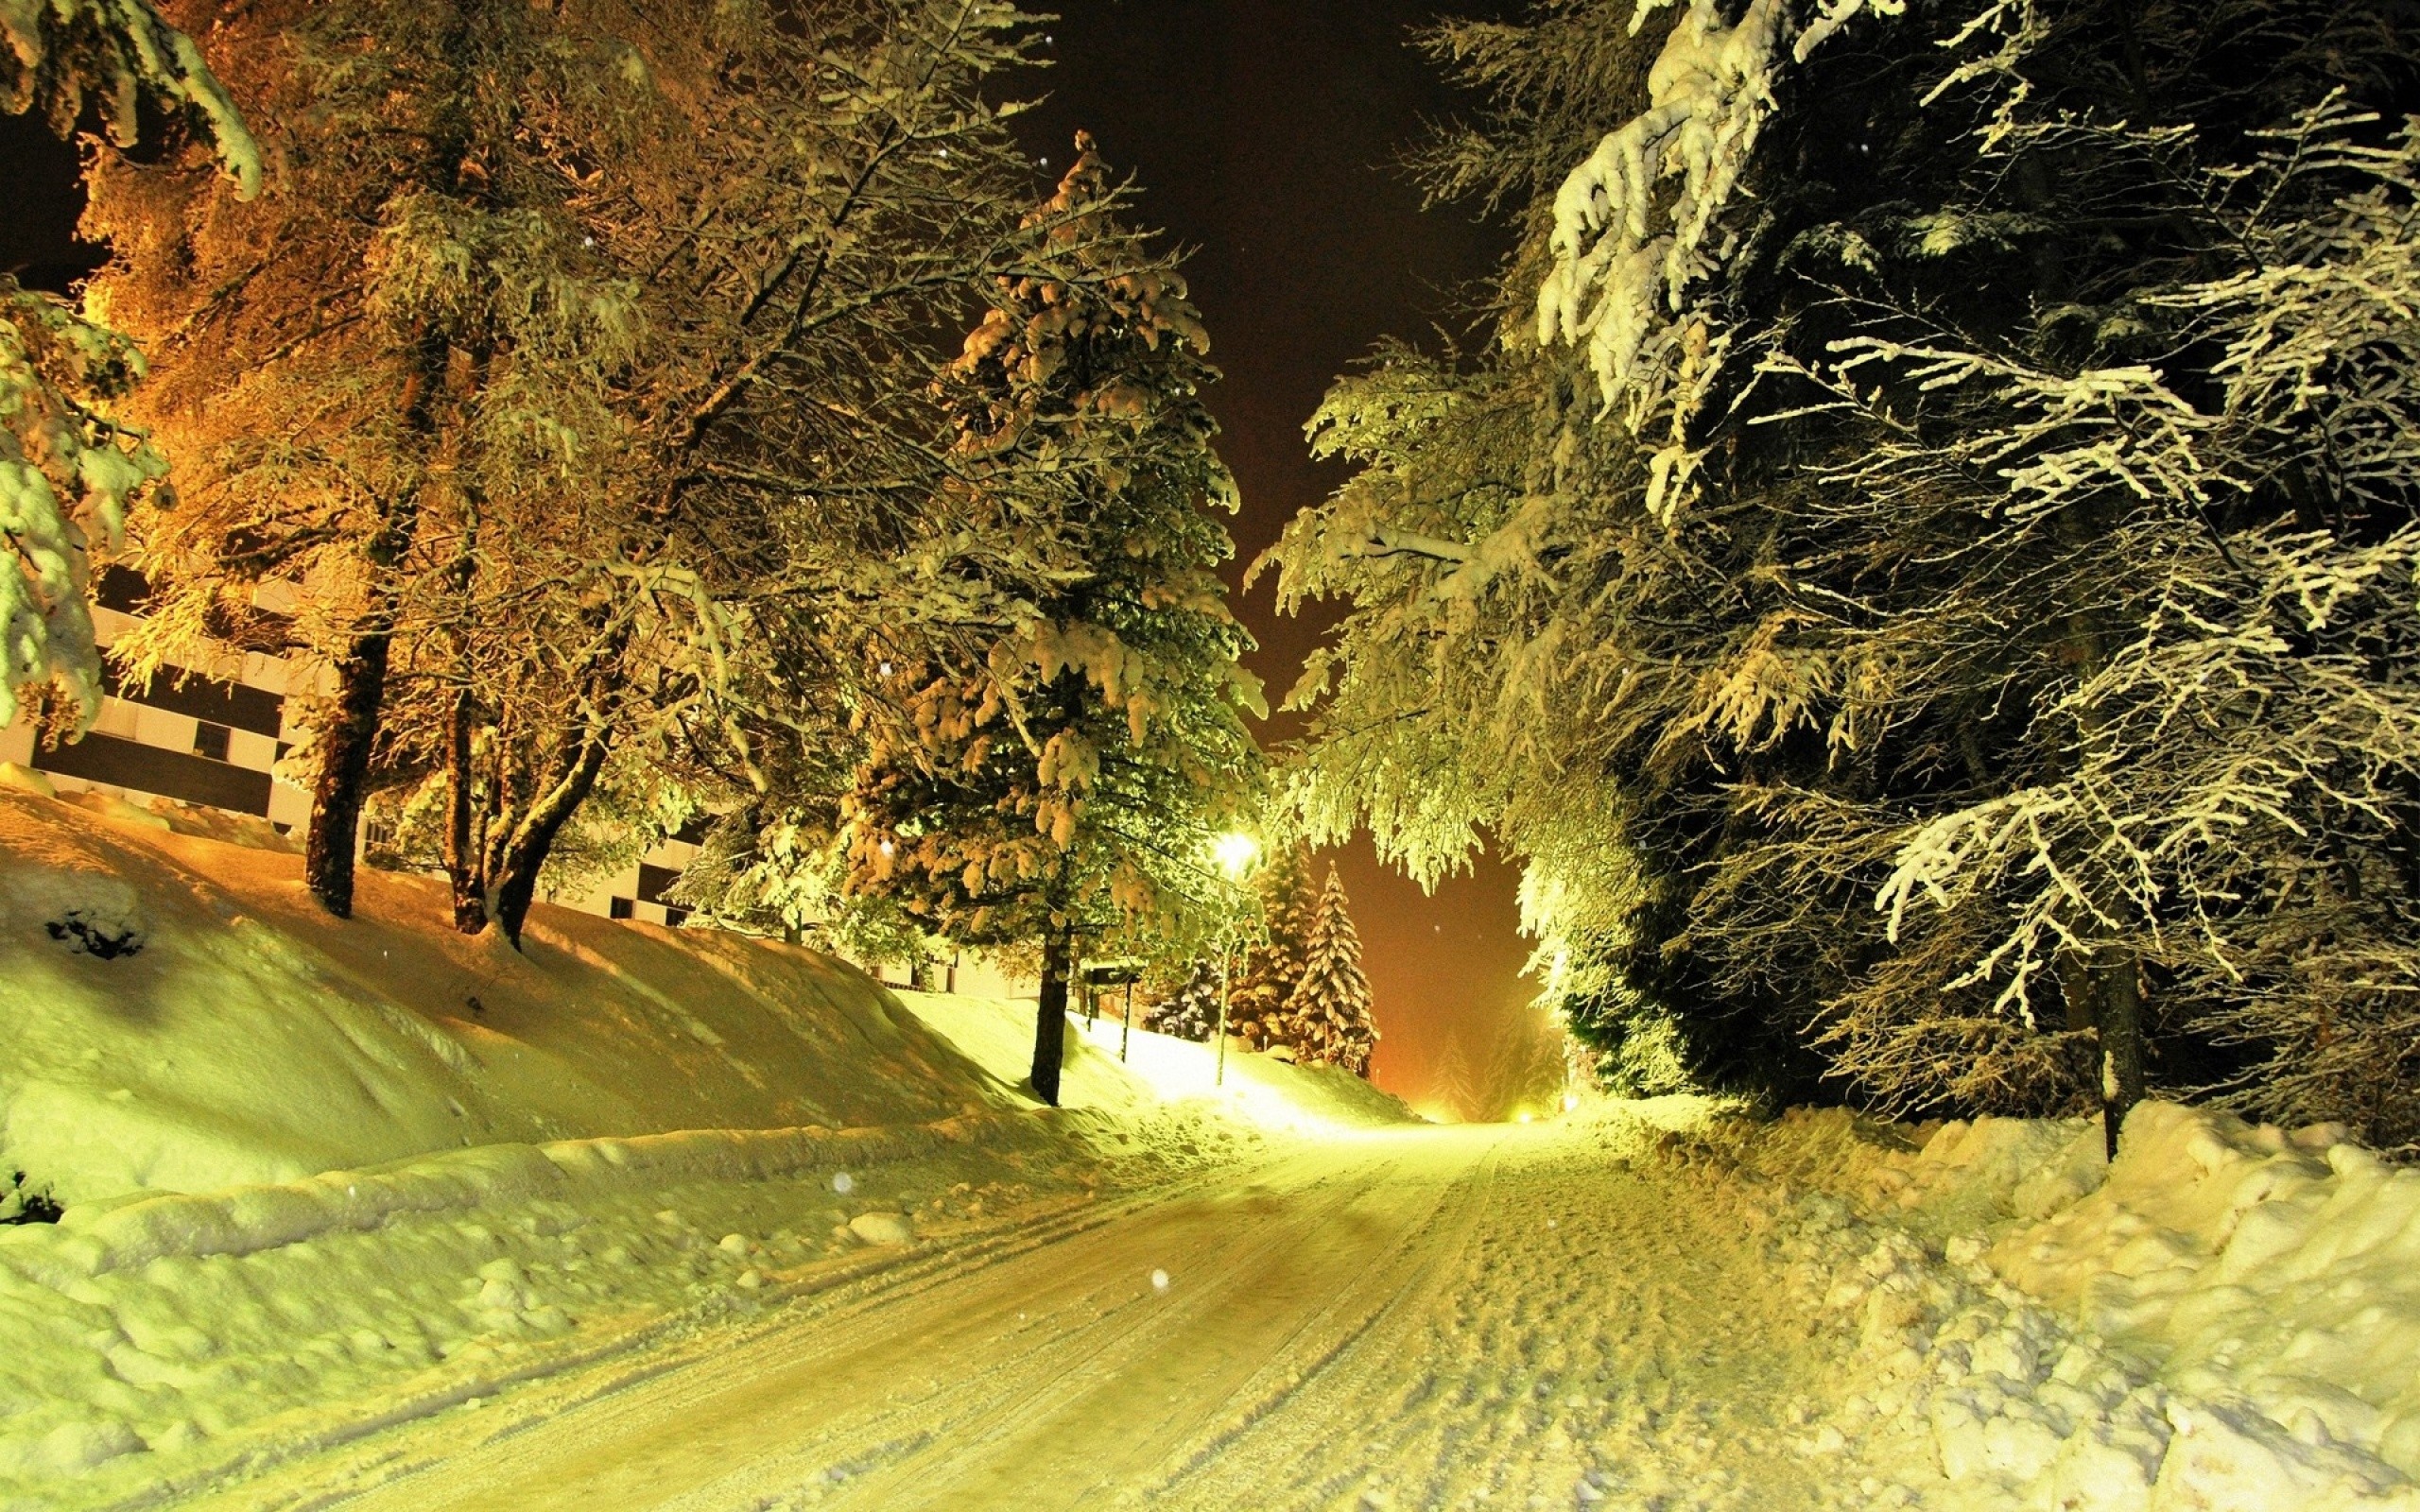 Winter Road at Night wallpaper. Winter Road at Night